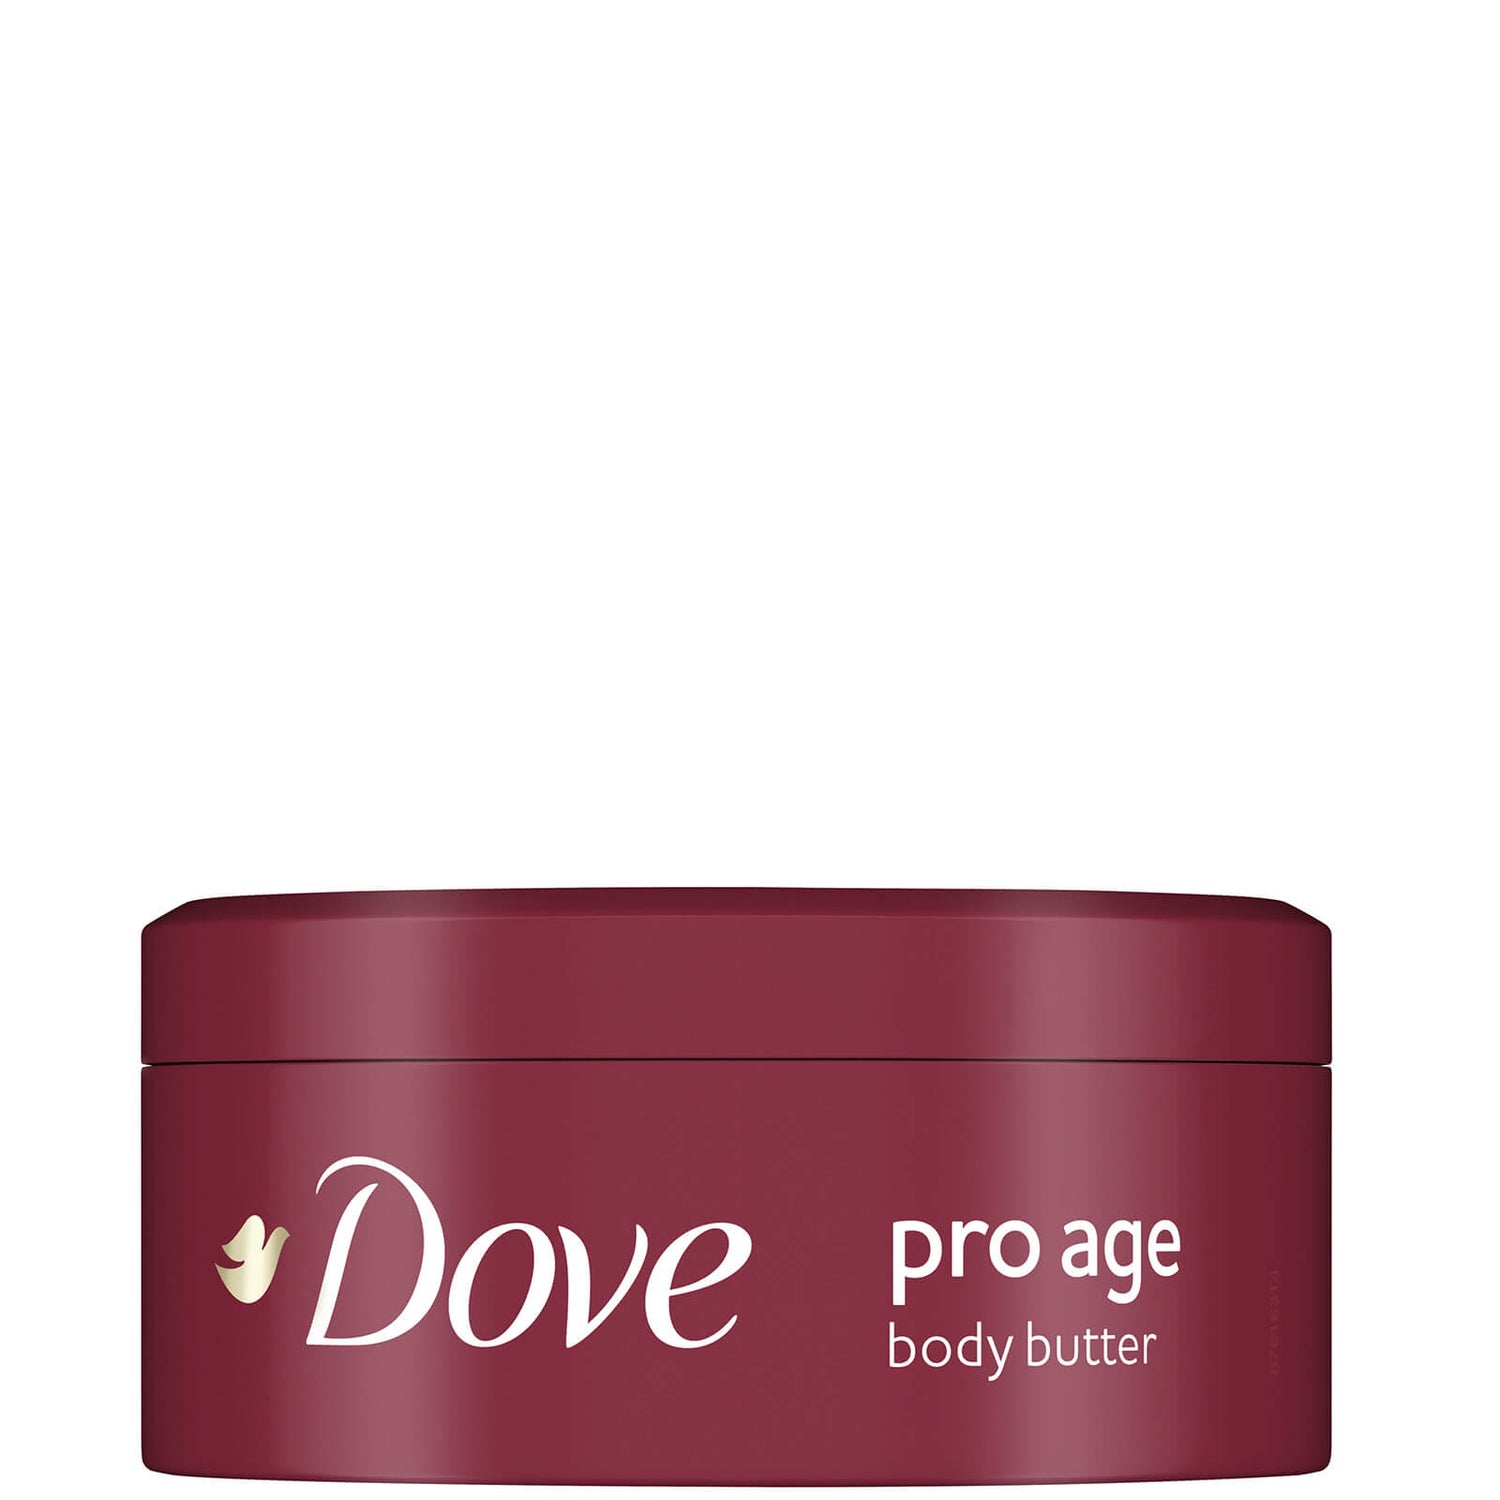 Dove Pro Age Body Butter